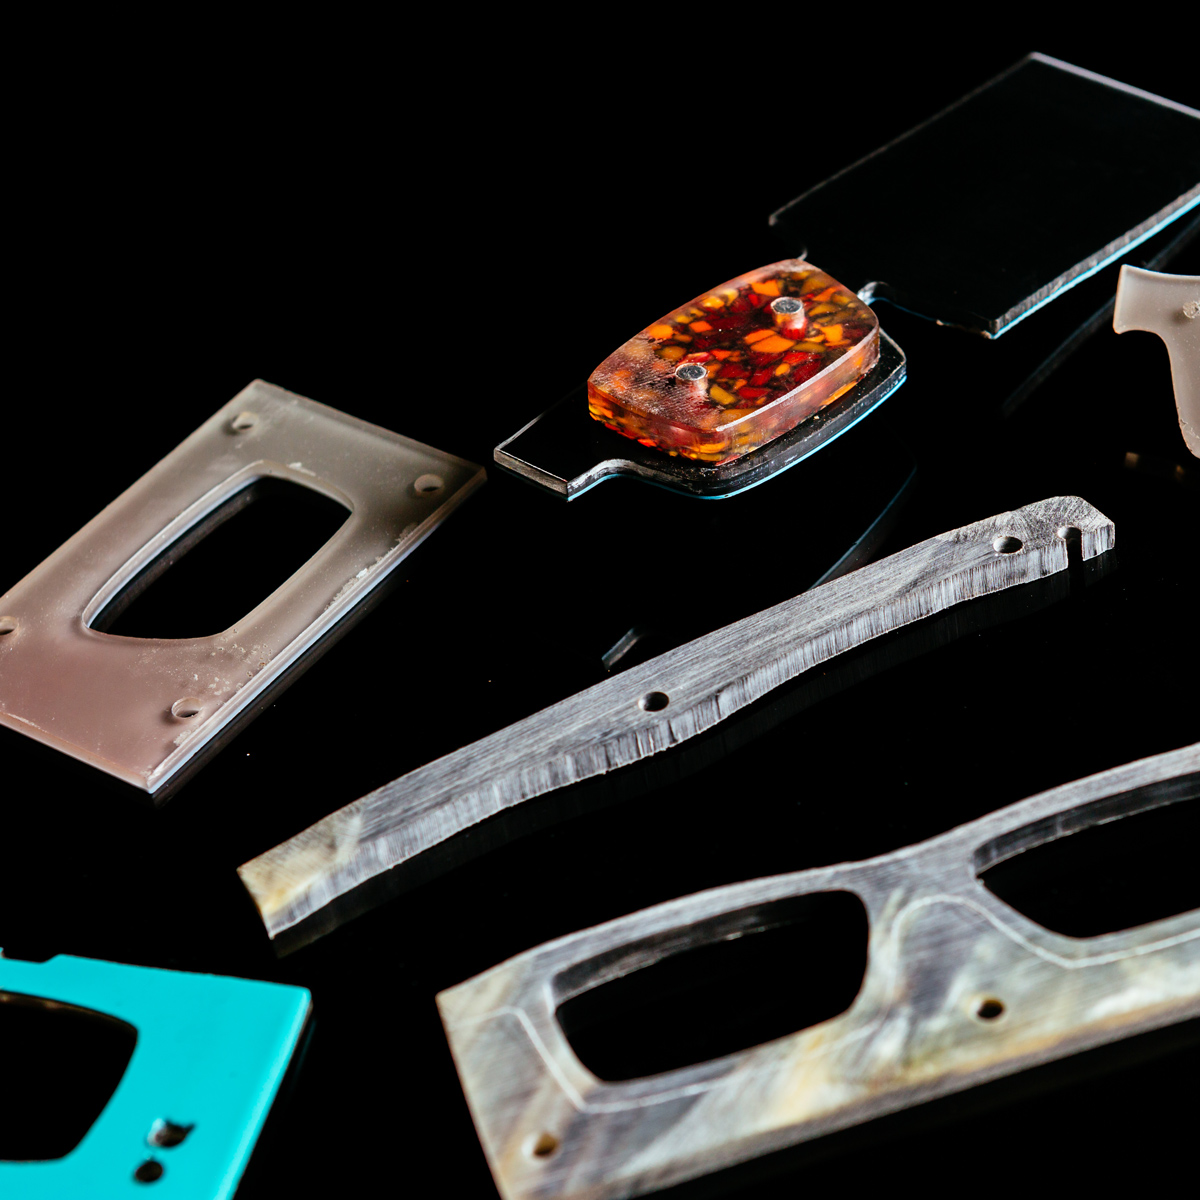 M05-1: Making an eyewear frame using natural materials